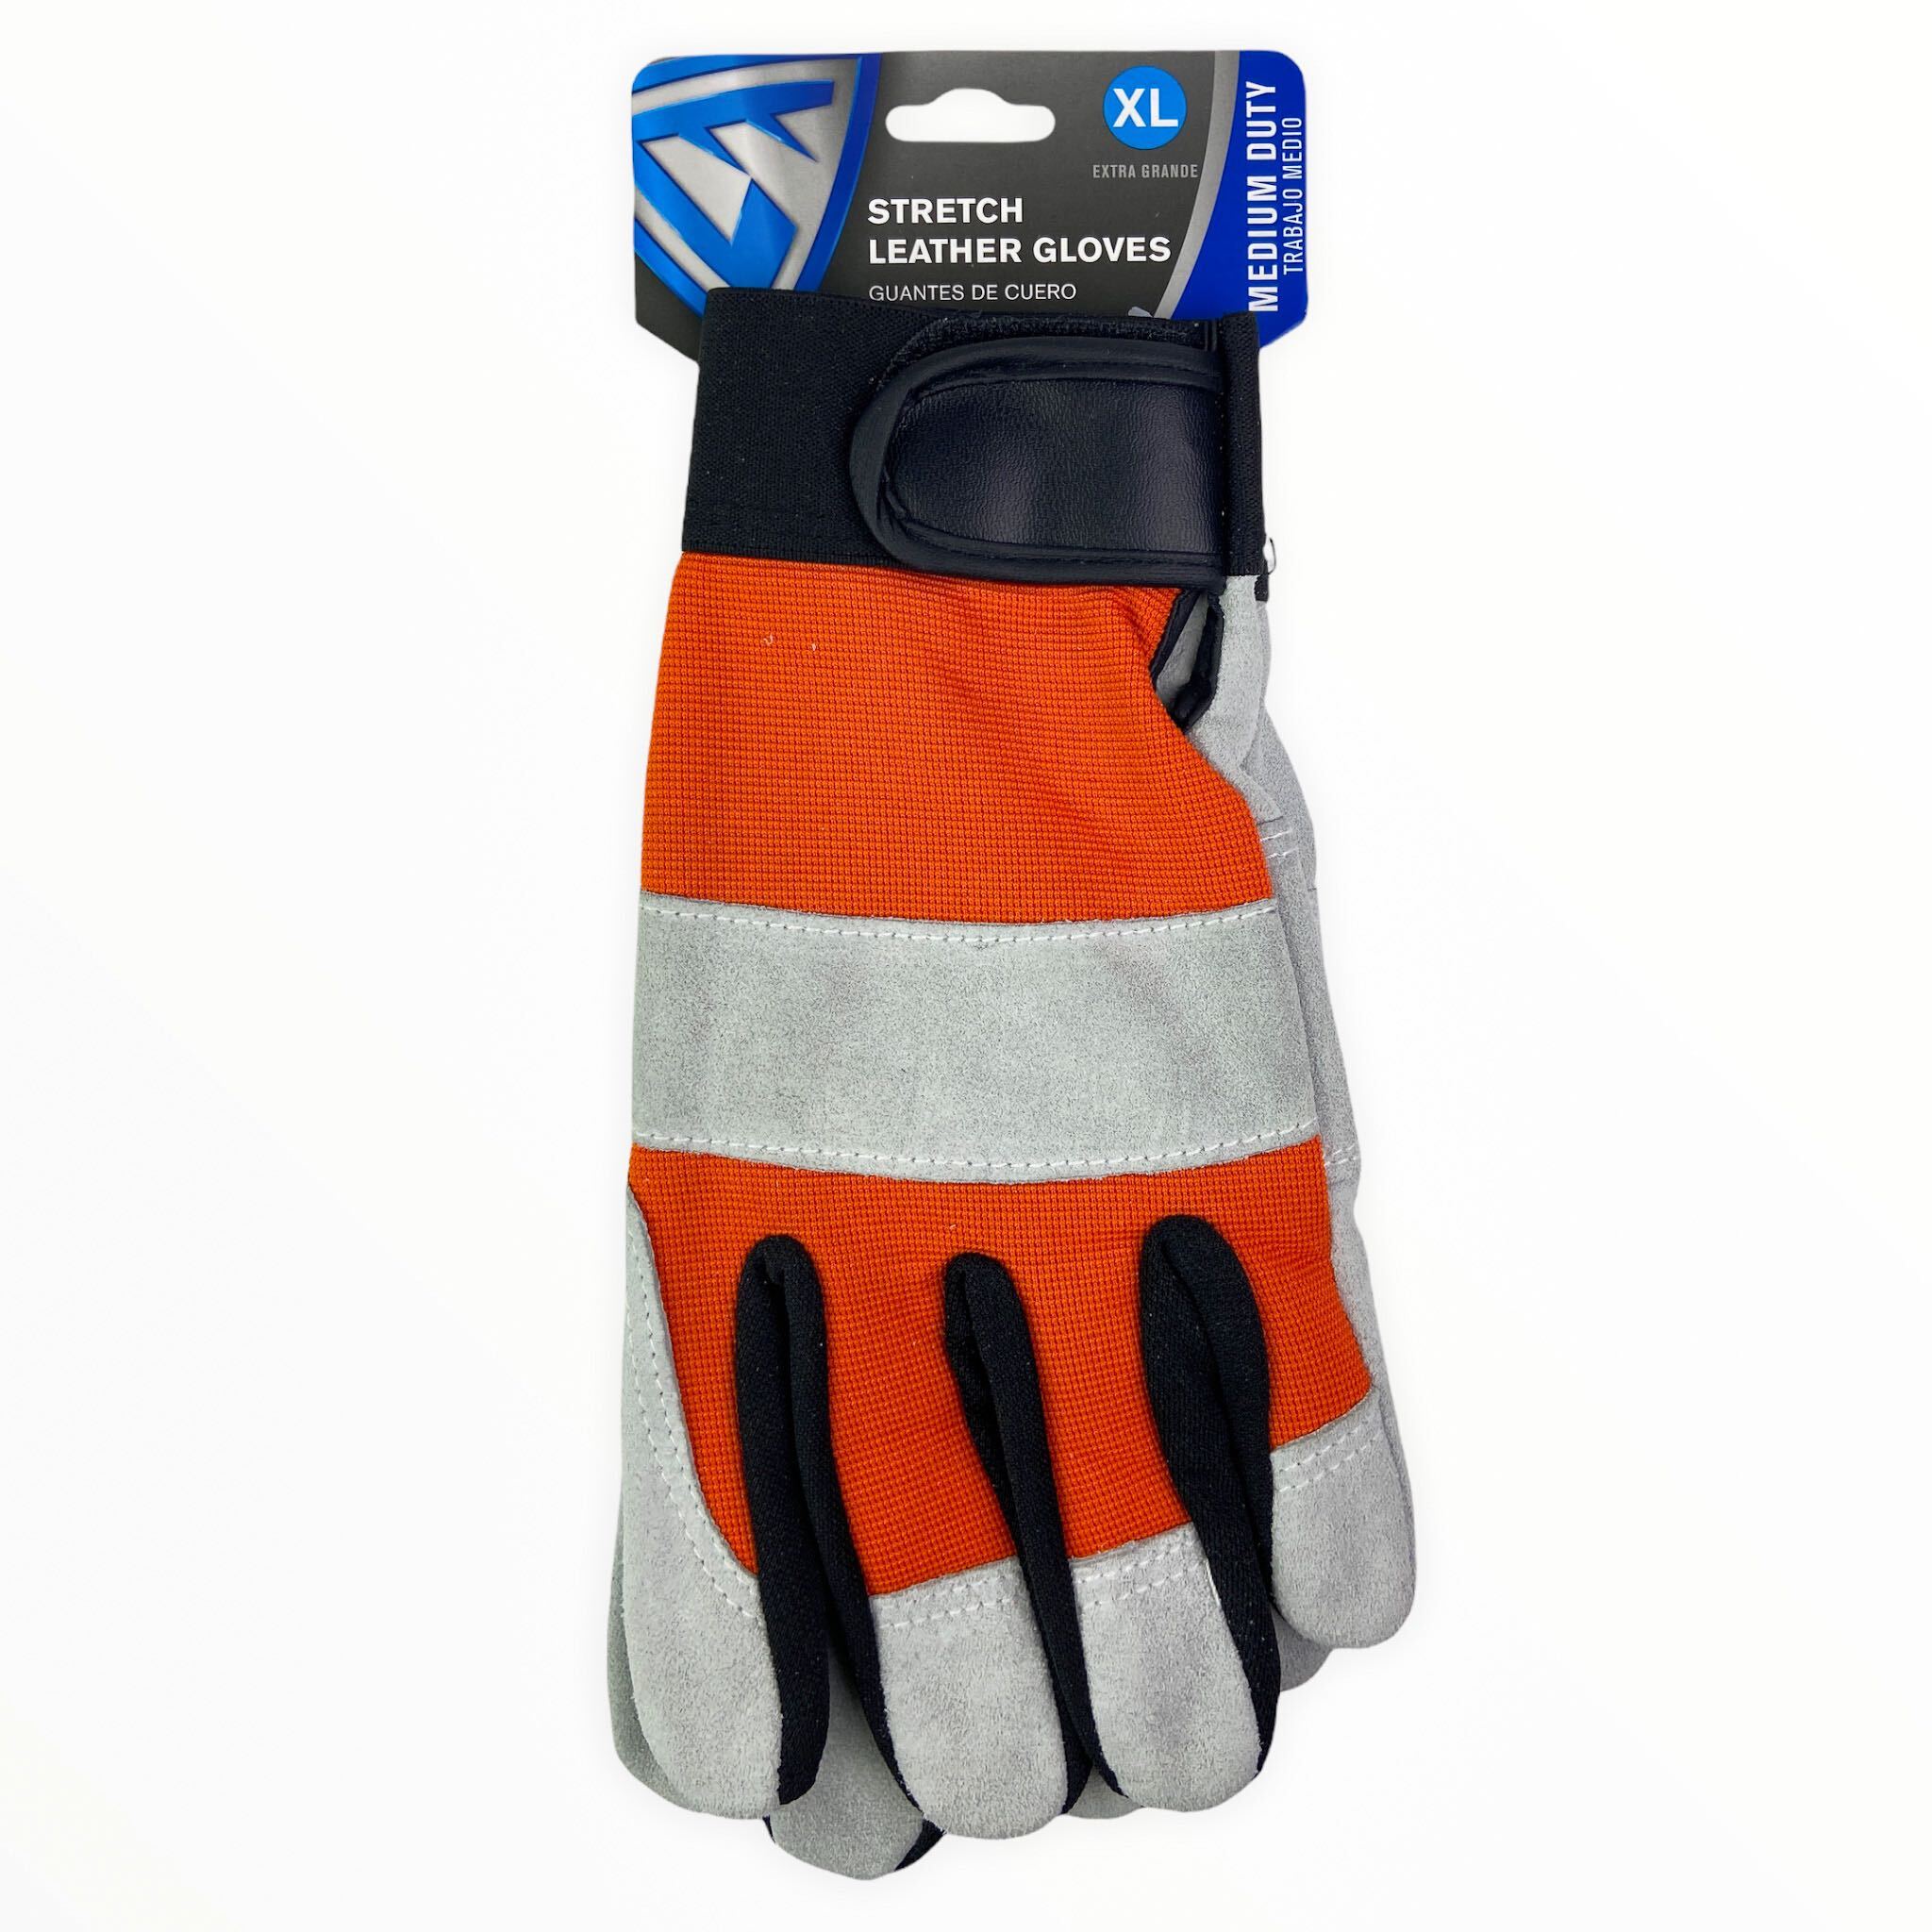 Westchester Leather Stretch Hybrid Work Gloves $9.99 (reg $30)